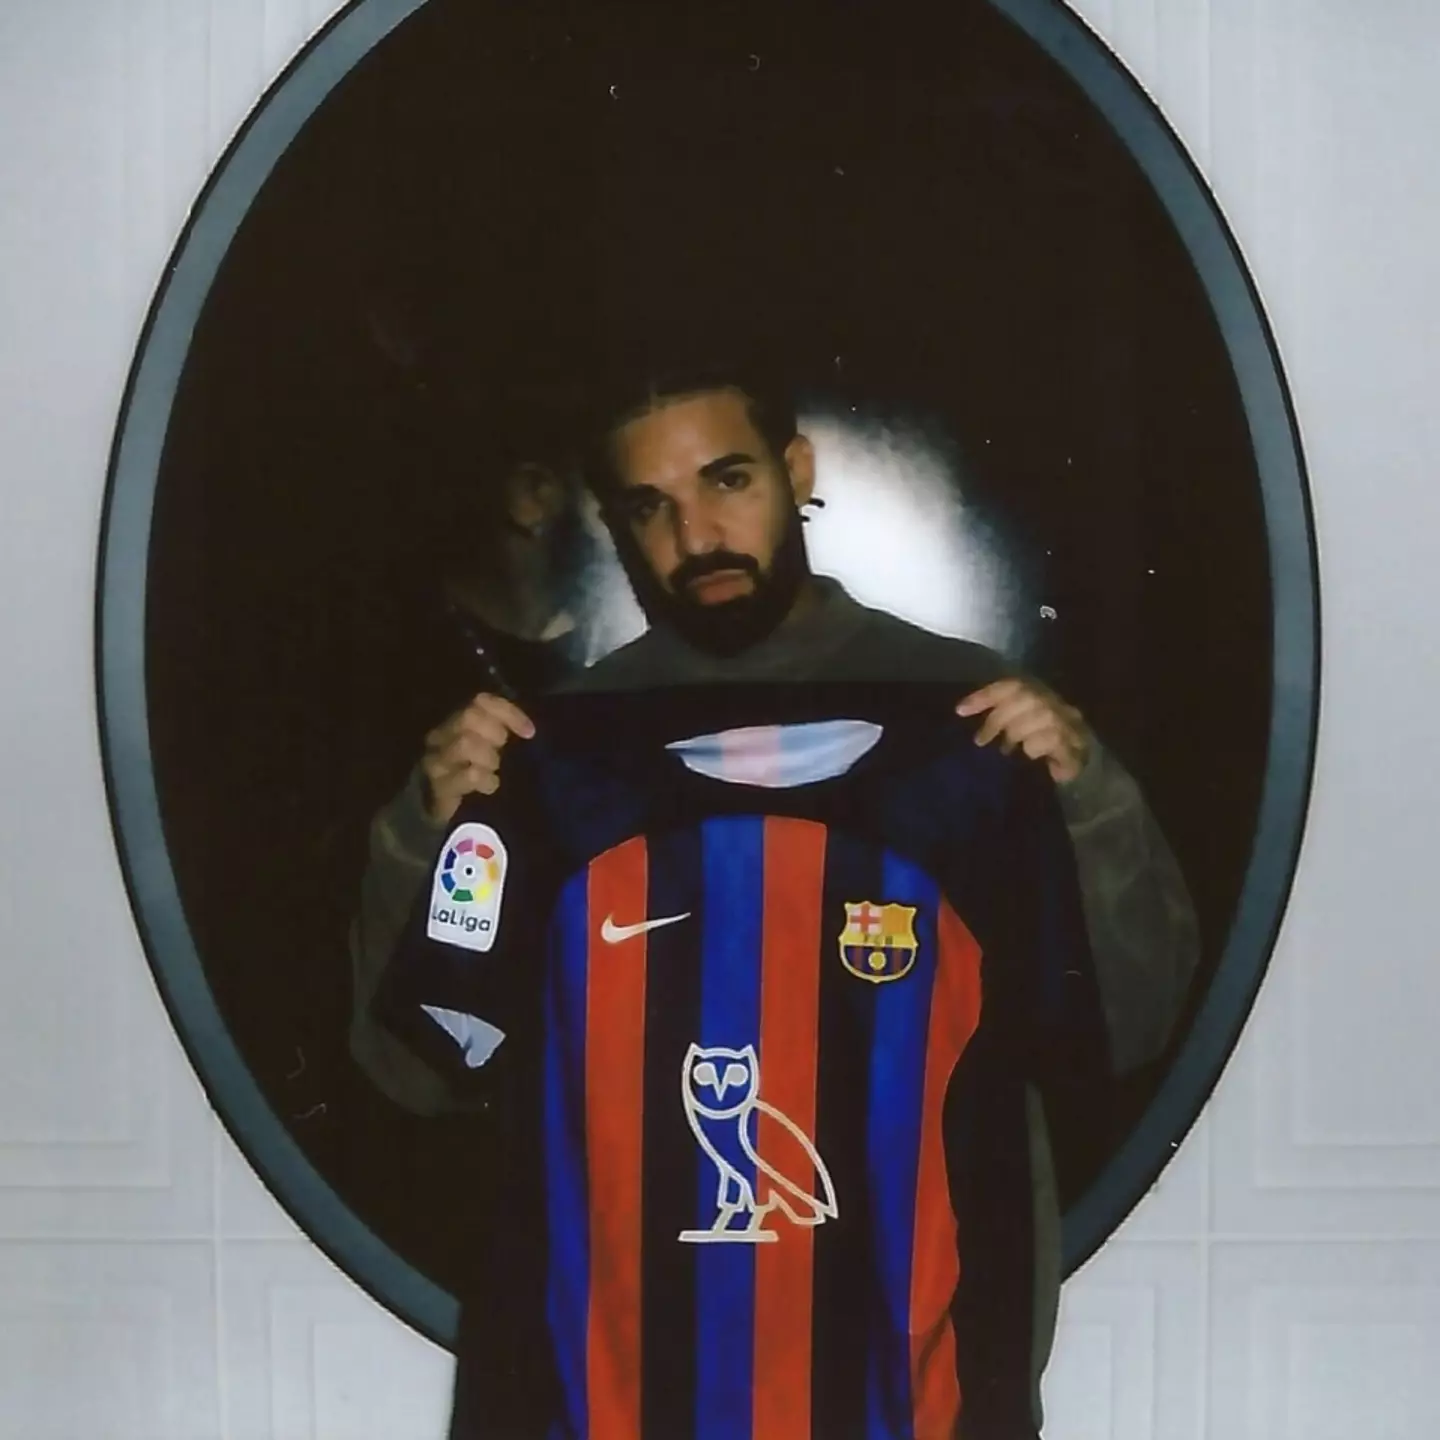 Barcelona even had Drake's logo on their kit.